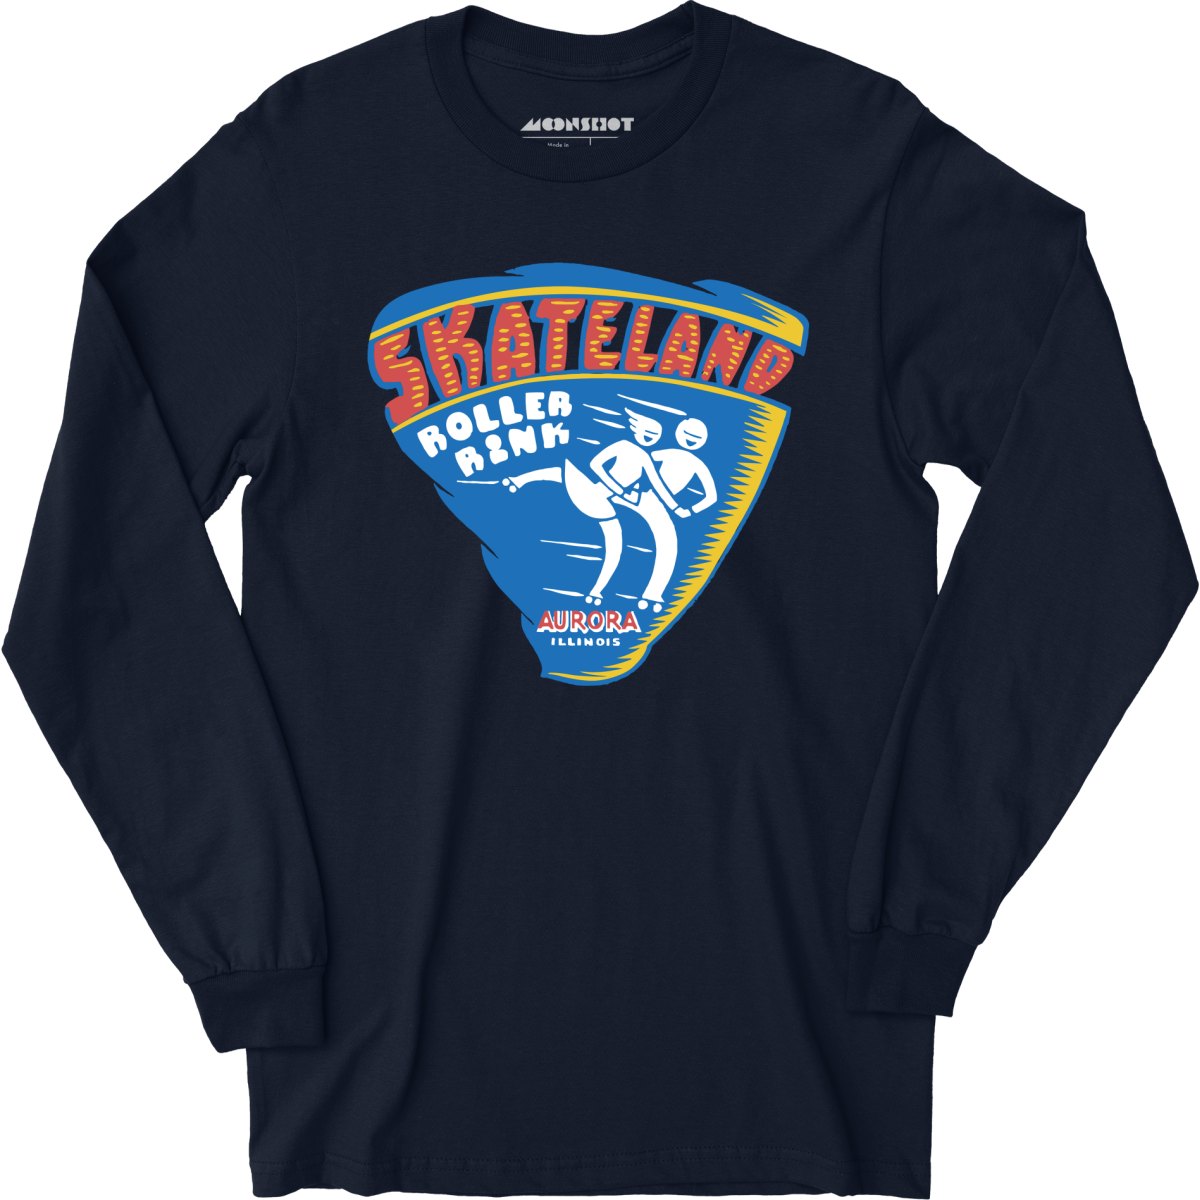 Skateland - Aurora, IL - Vintage Roller Rink - Long Sleeve T-Shirt